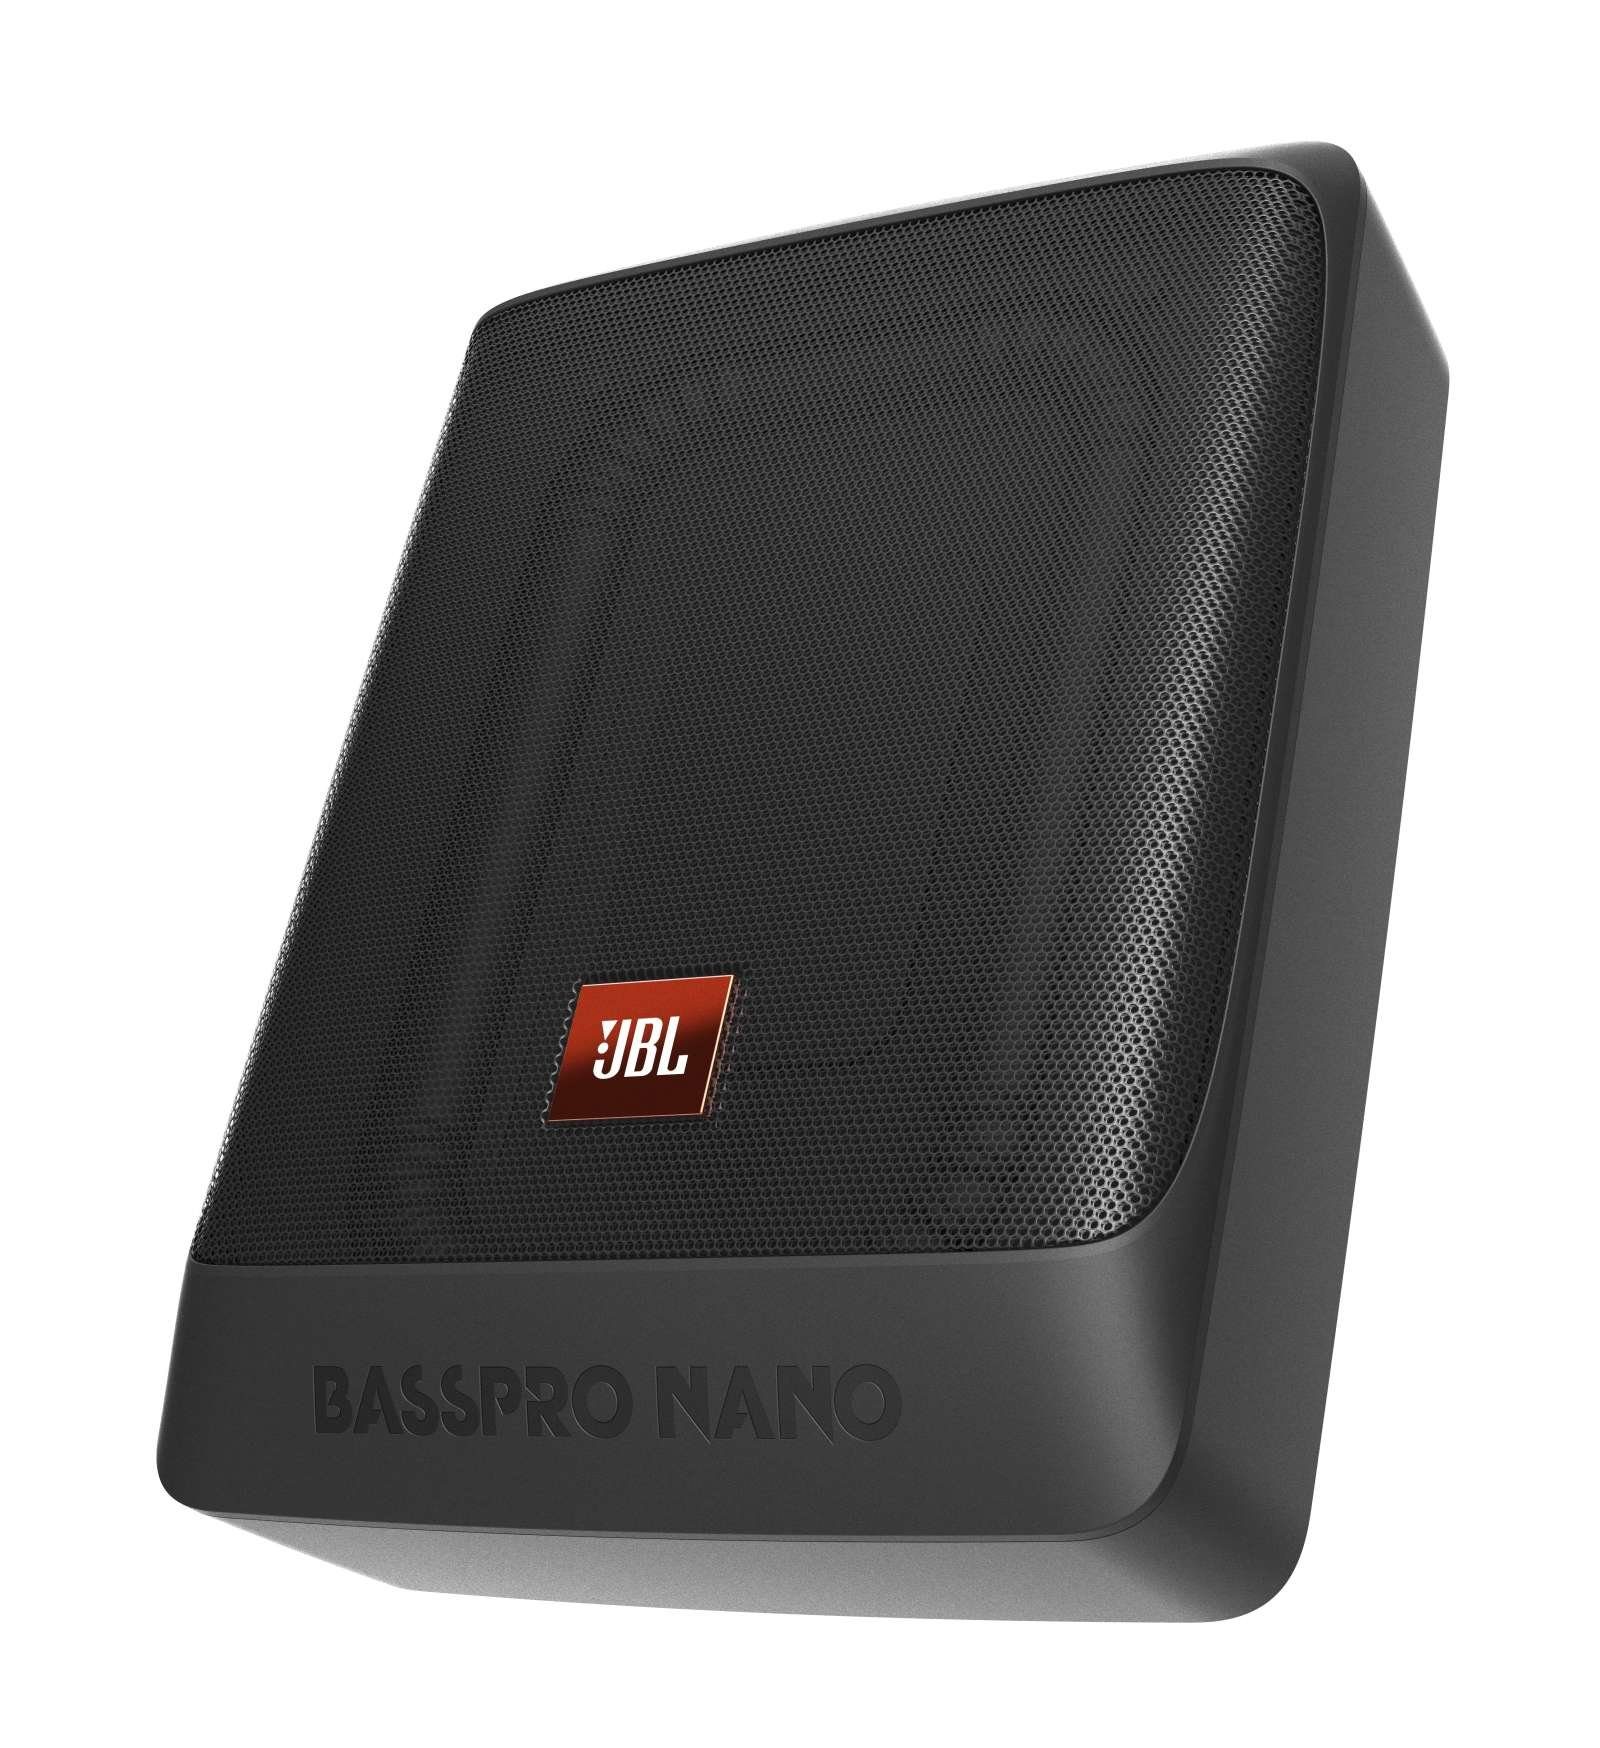 JBL JBL BassPro Nano AutoSubwoofer online kaufen OTTO